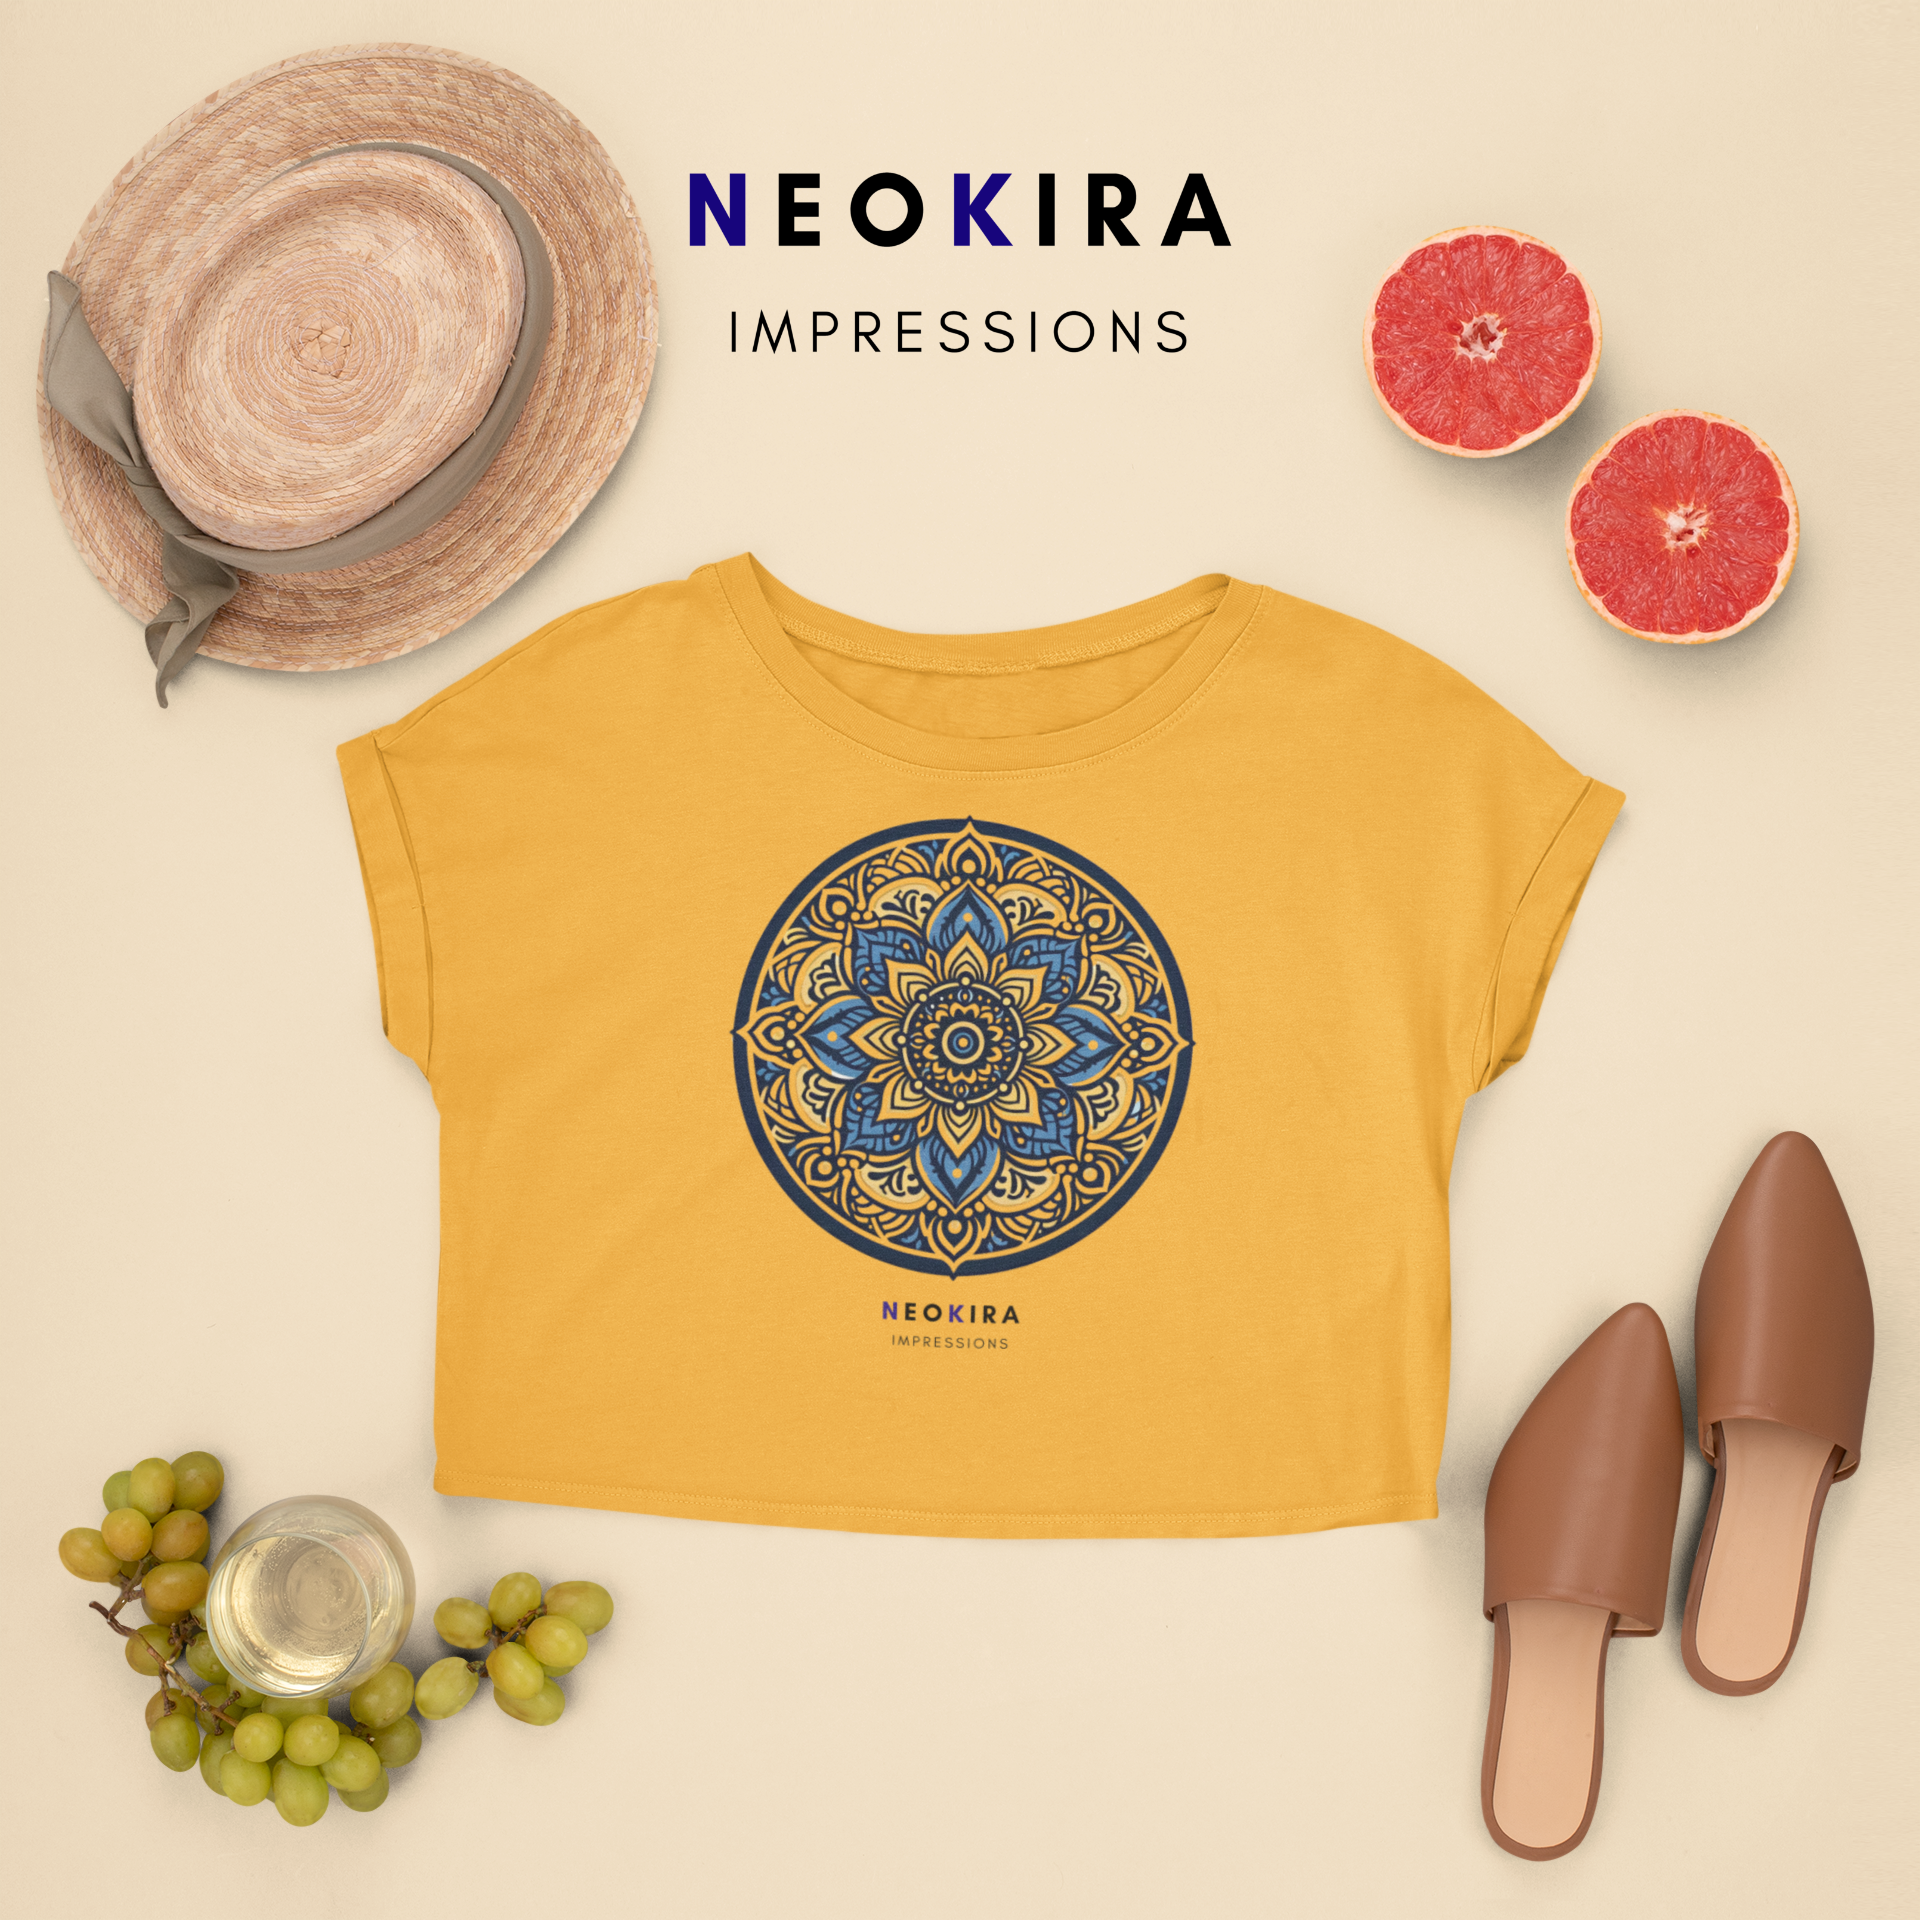 NEOKIRA IMPRESSIONS